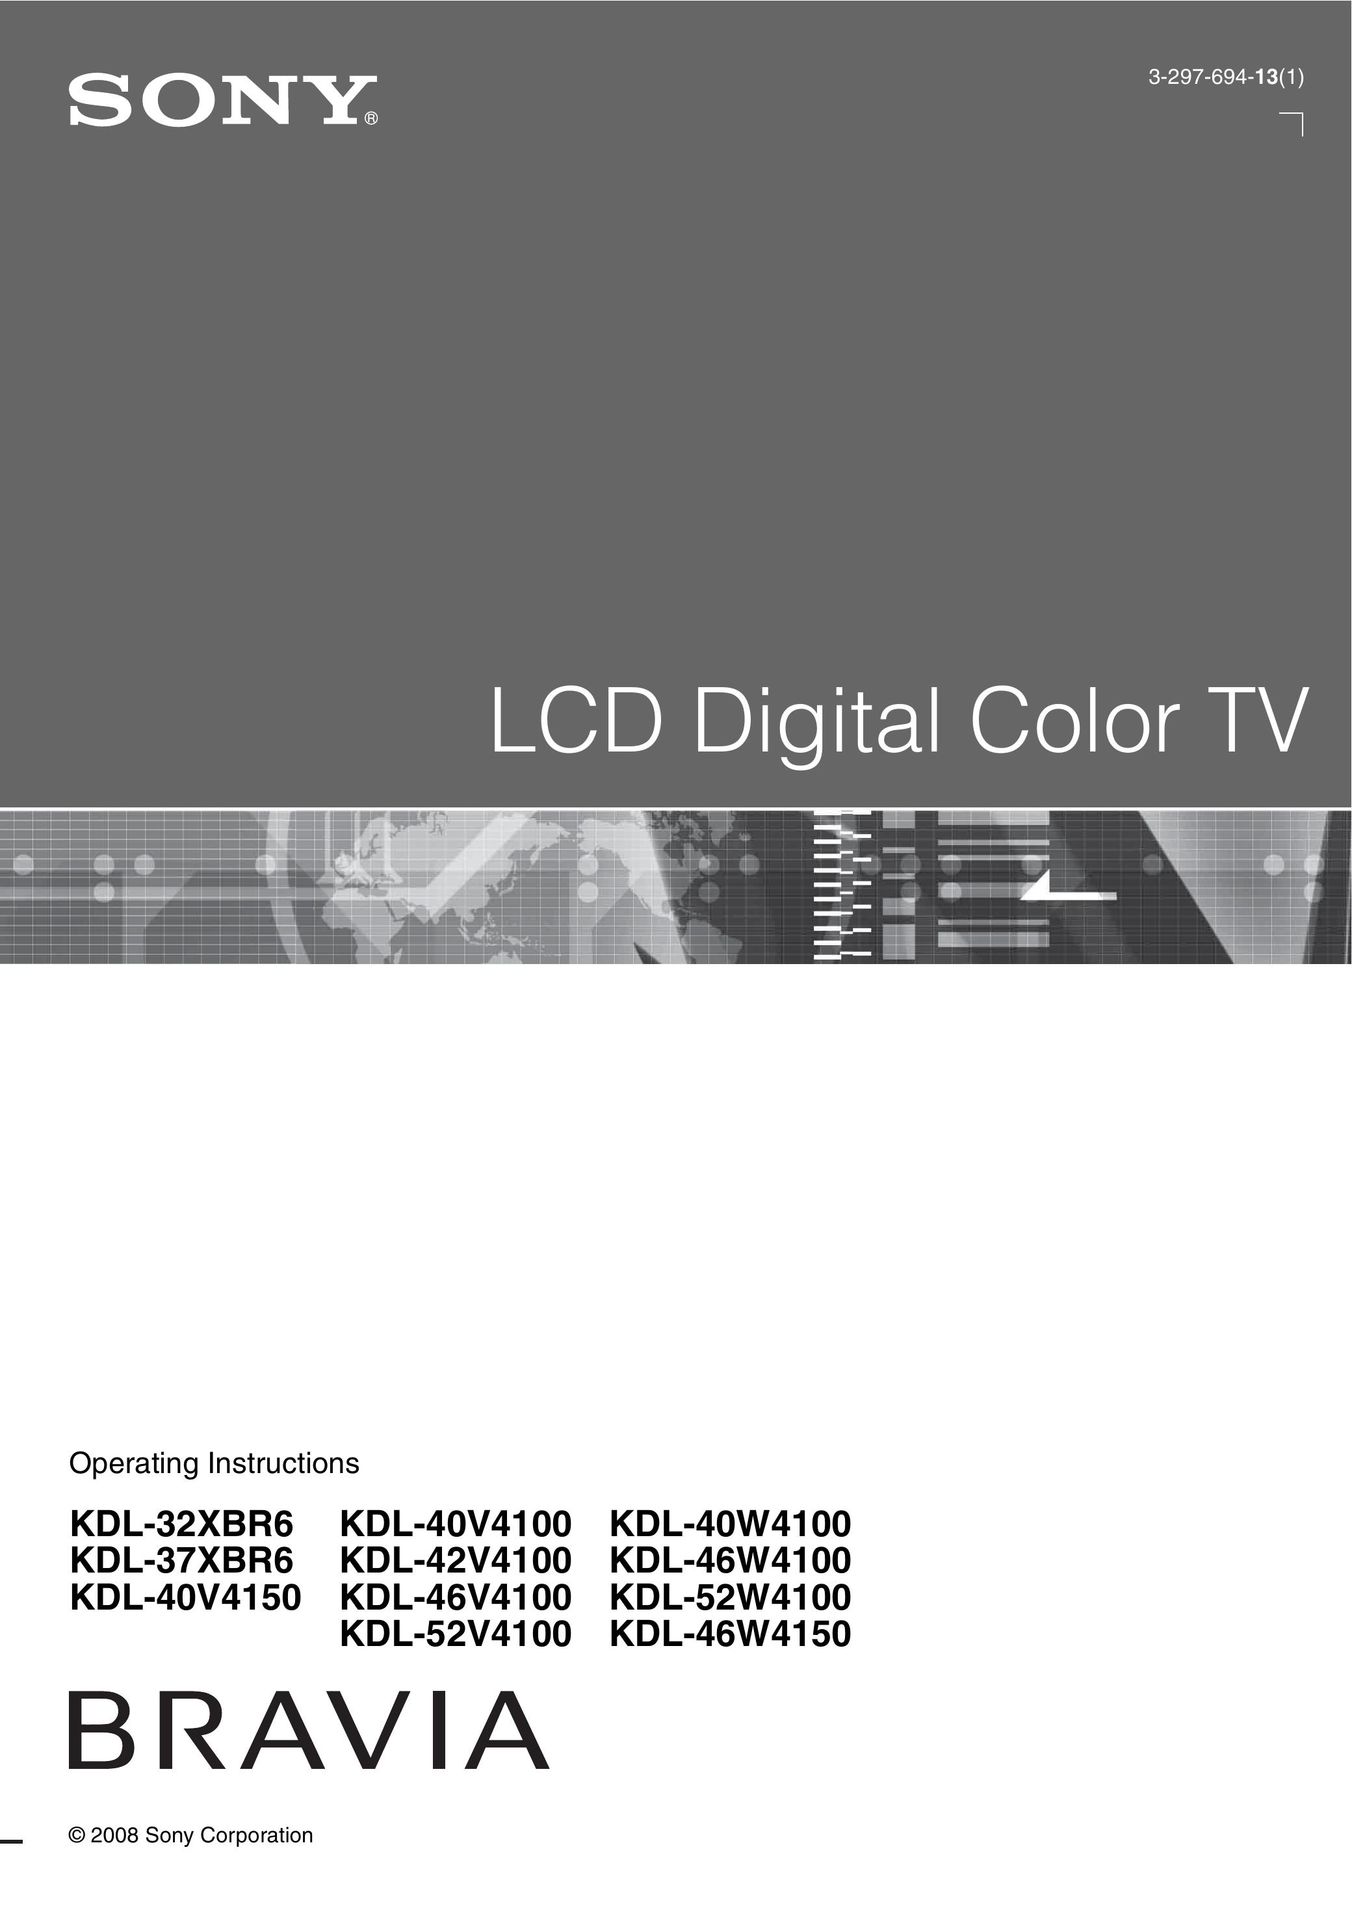 Sony KDL-46V4100 Beverage Dispenser User Manual